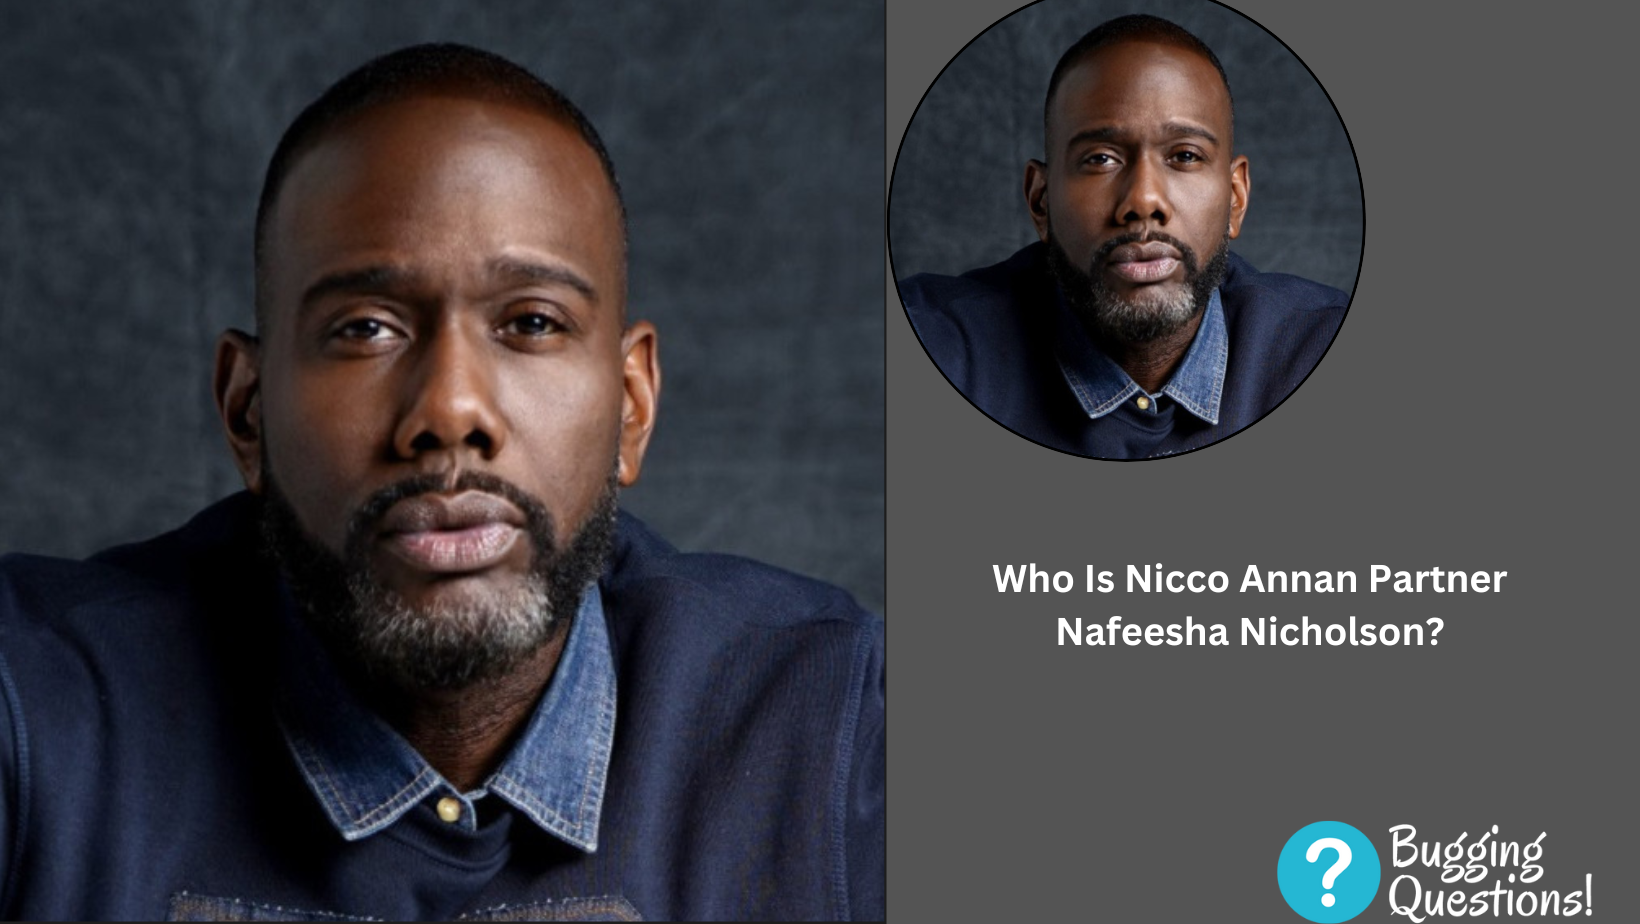 Who Is Nicco Annan Partner Nafeesha Nicholson?